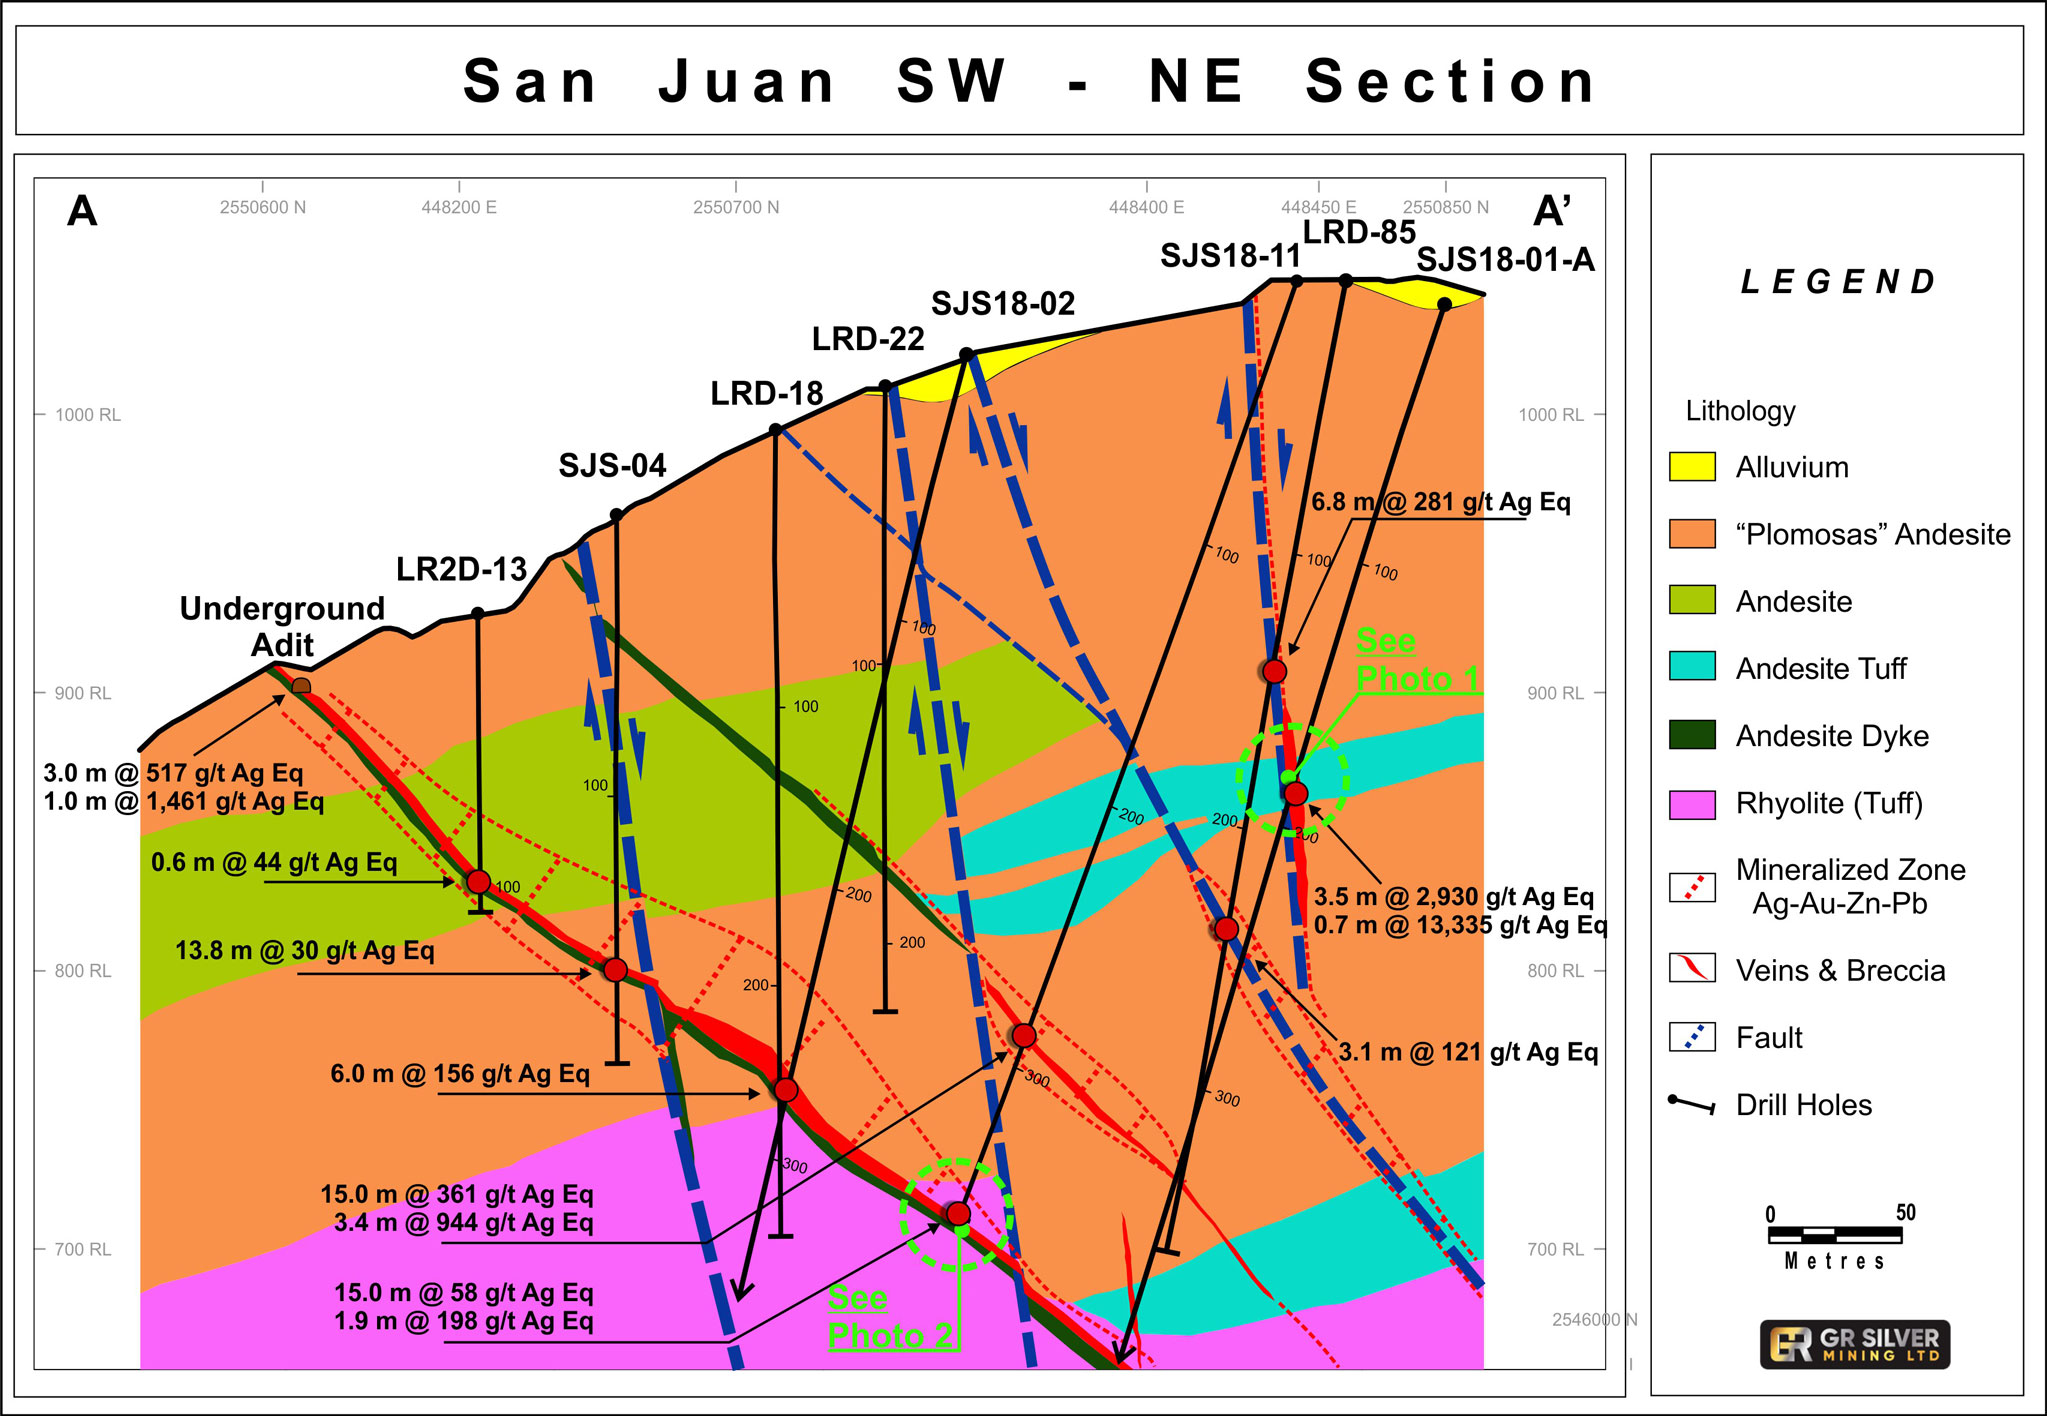 San Juan SW - NE Section